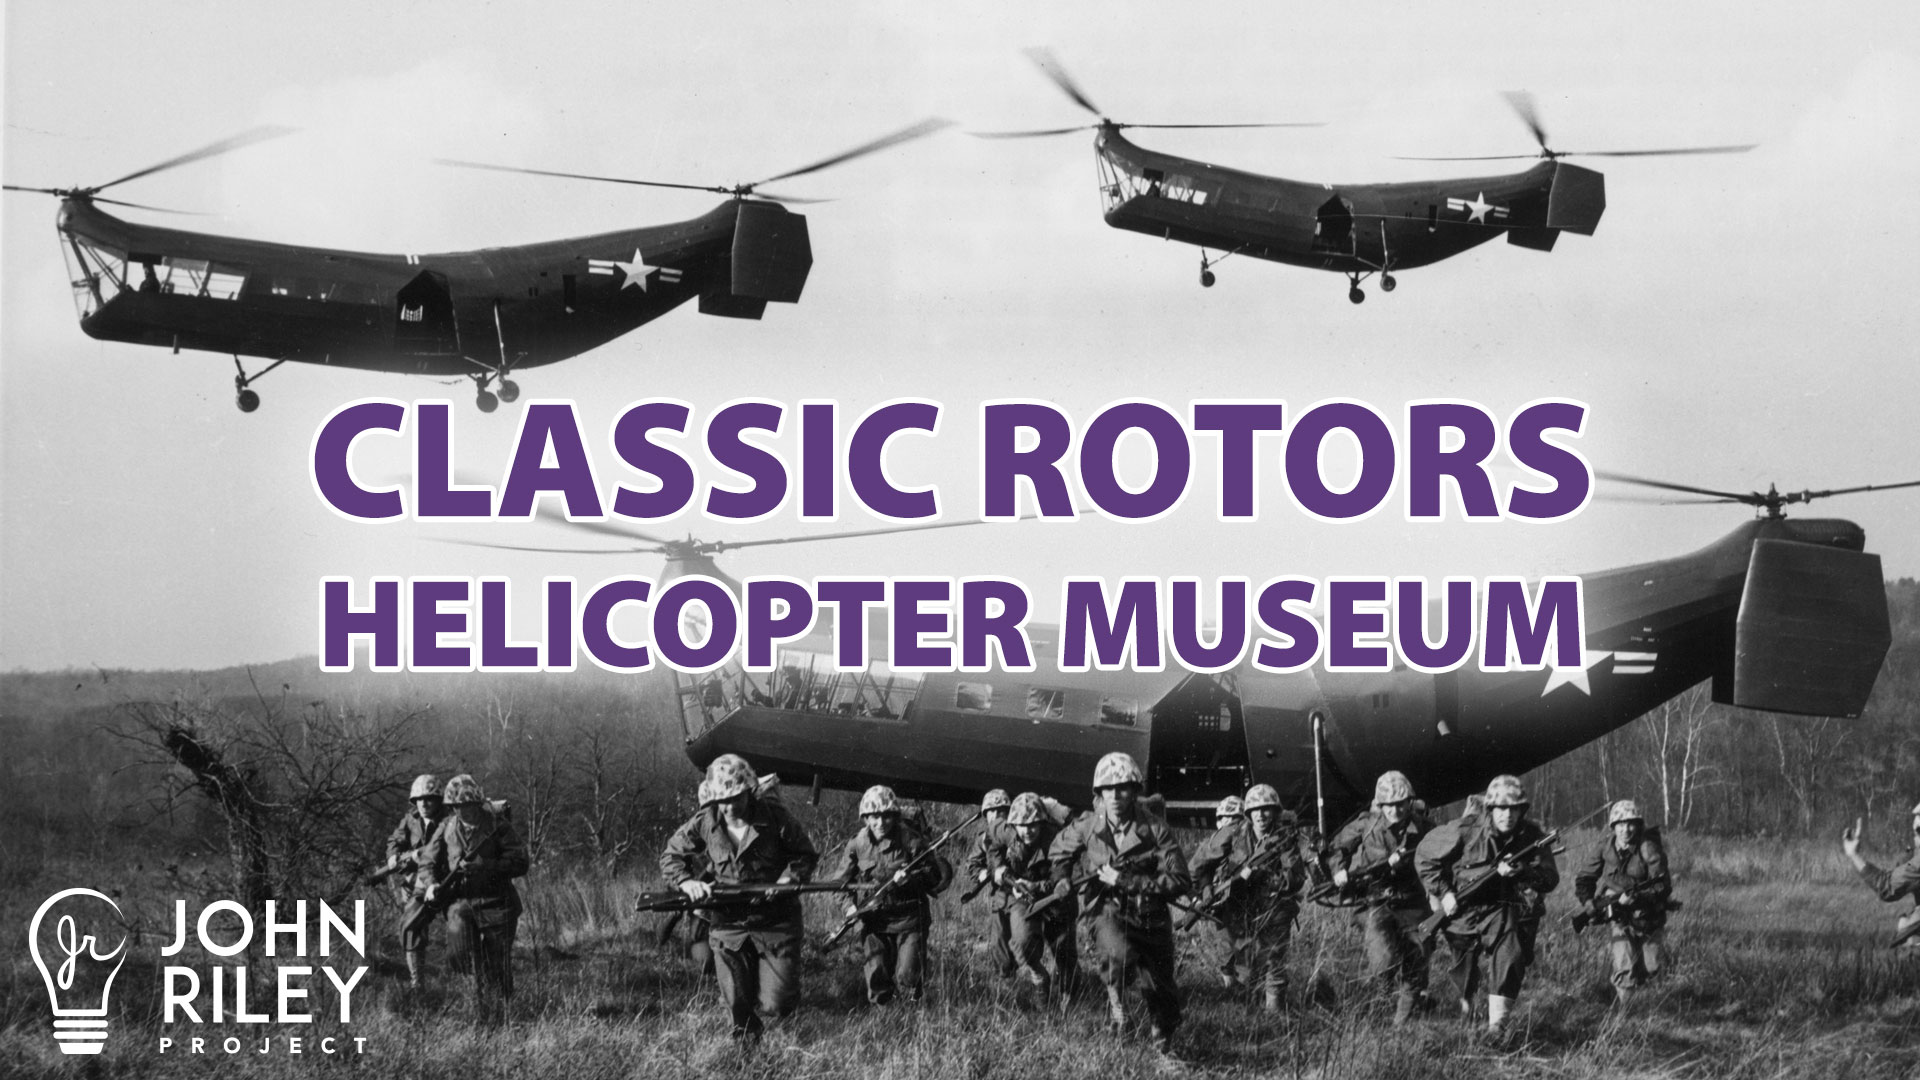 Mark DiCiero, Classic Rotors, Helicopter Museum